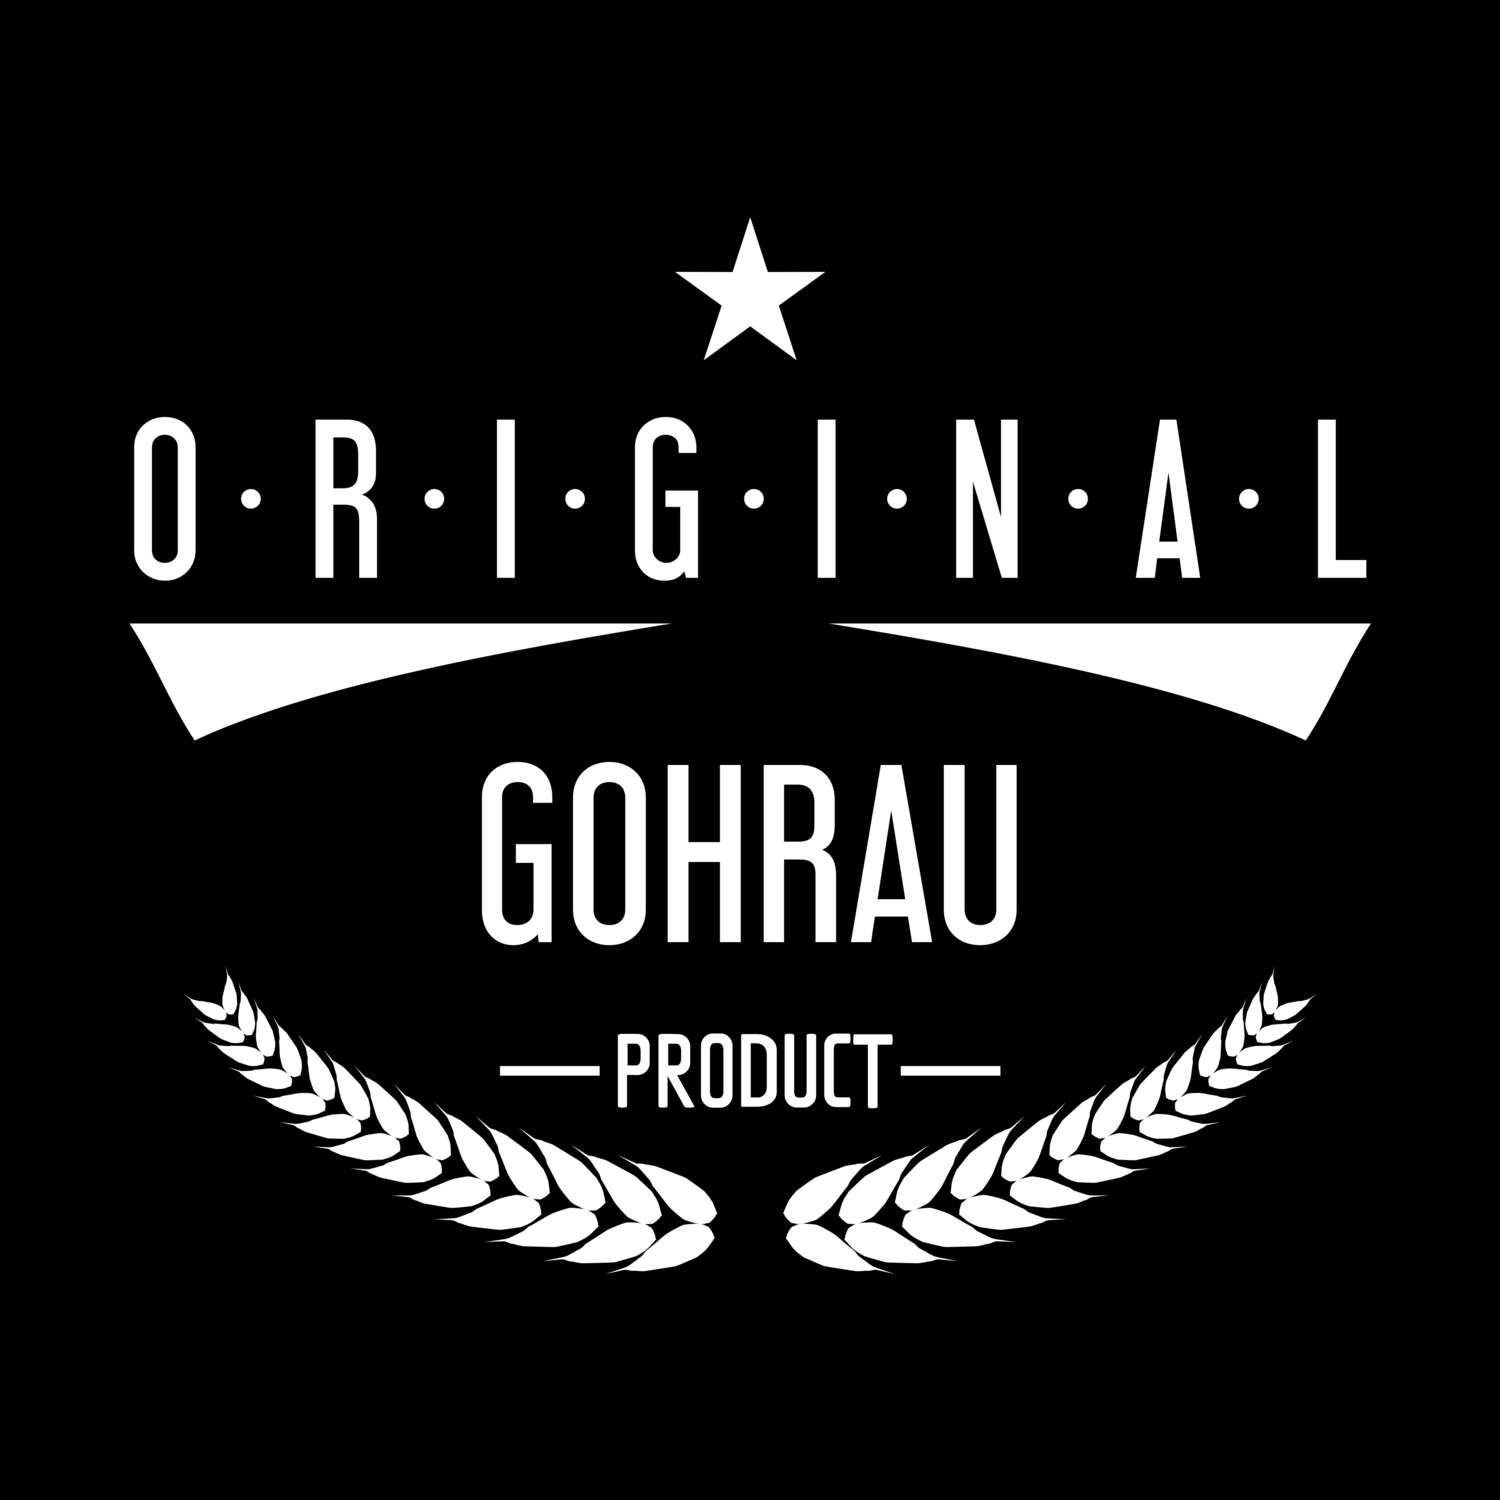 Gohrau T-Shirt »Original Product«